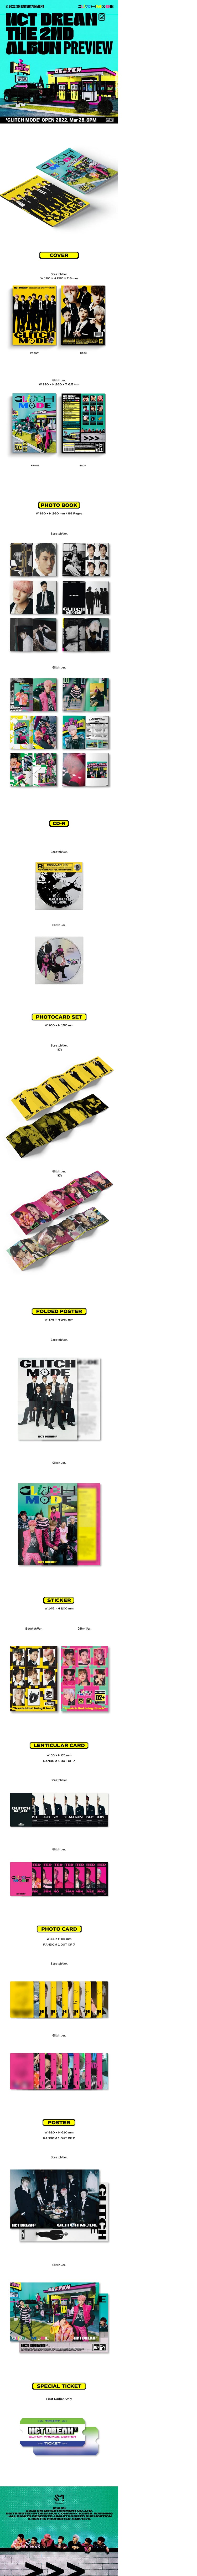 nct-dream-2nd-full-album-glitch-mode-photobook-version-contents